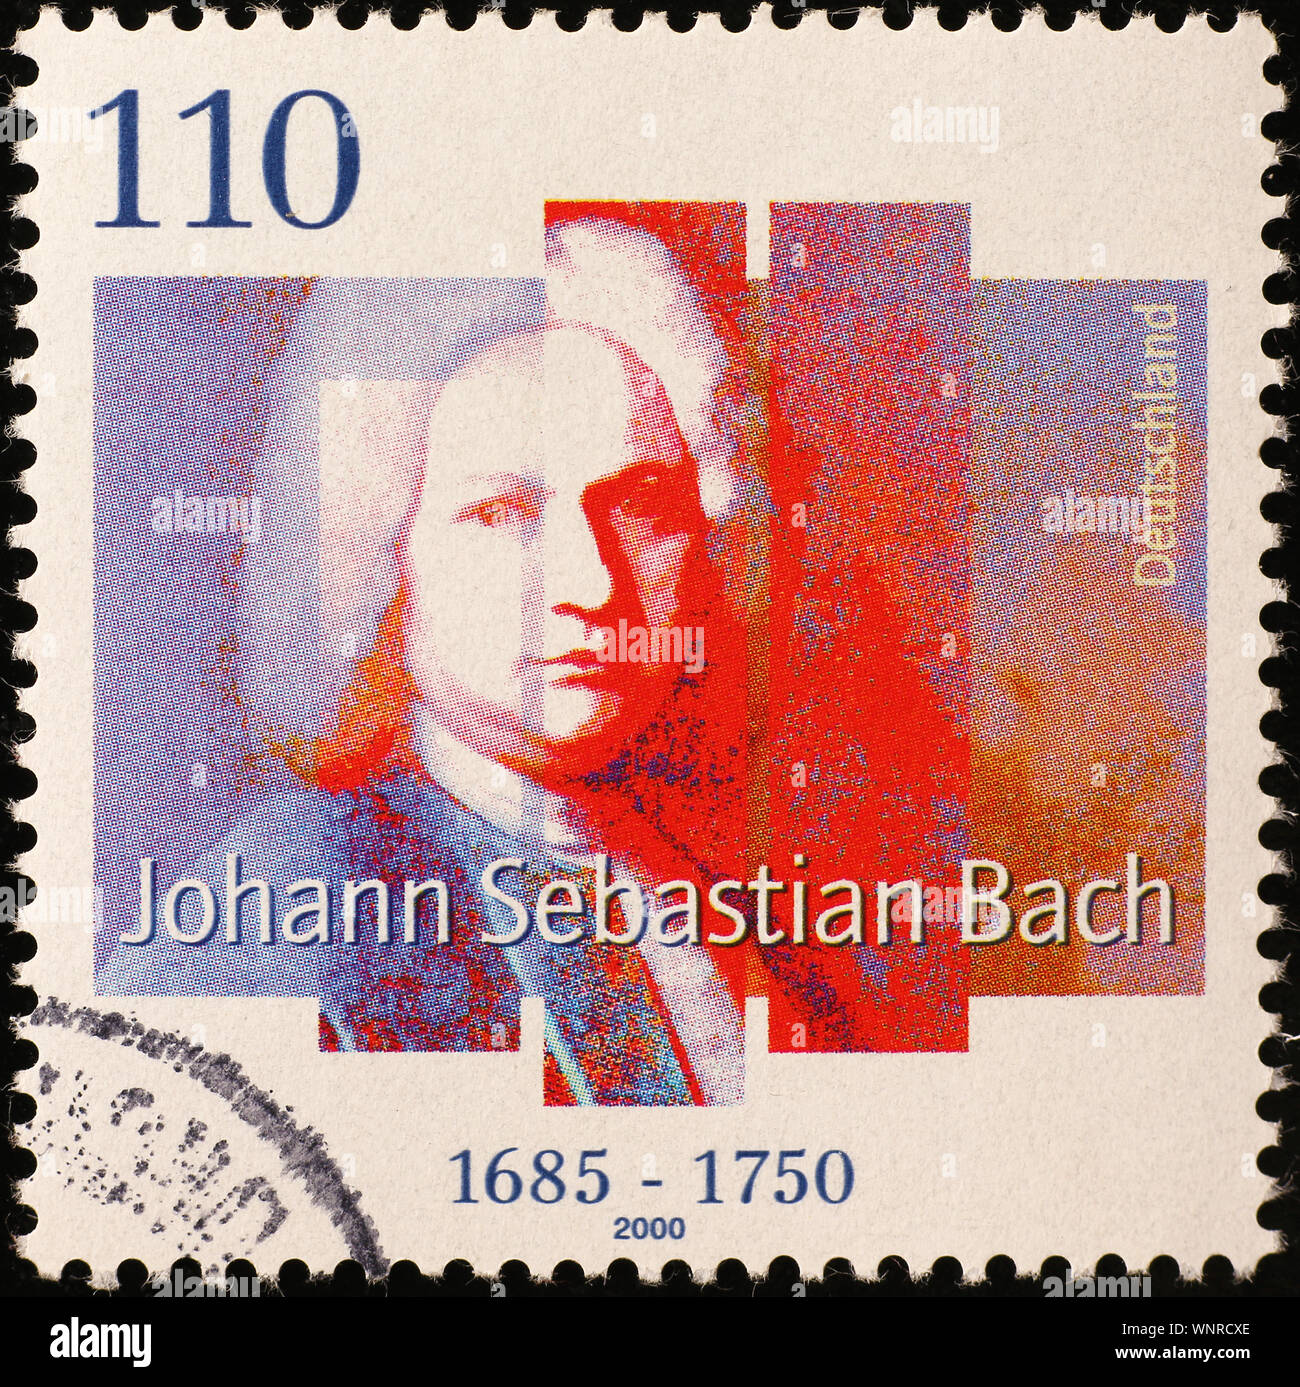 Portrait of Johann Sebastian Bach on german postage stamp Stock Photo